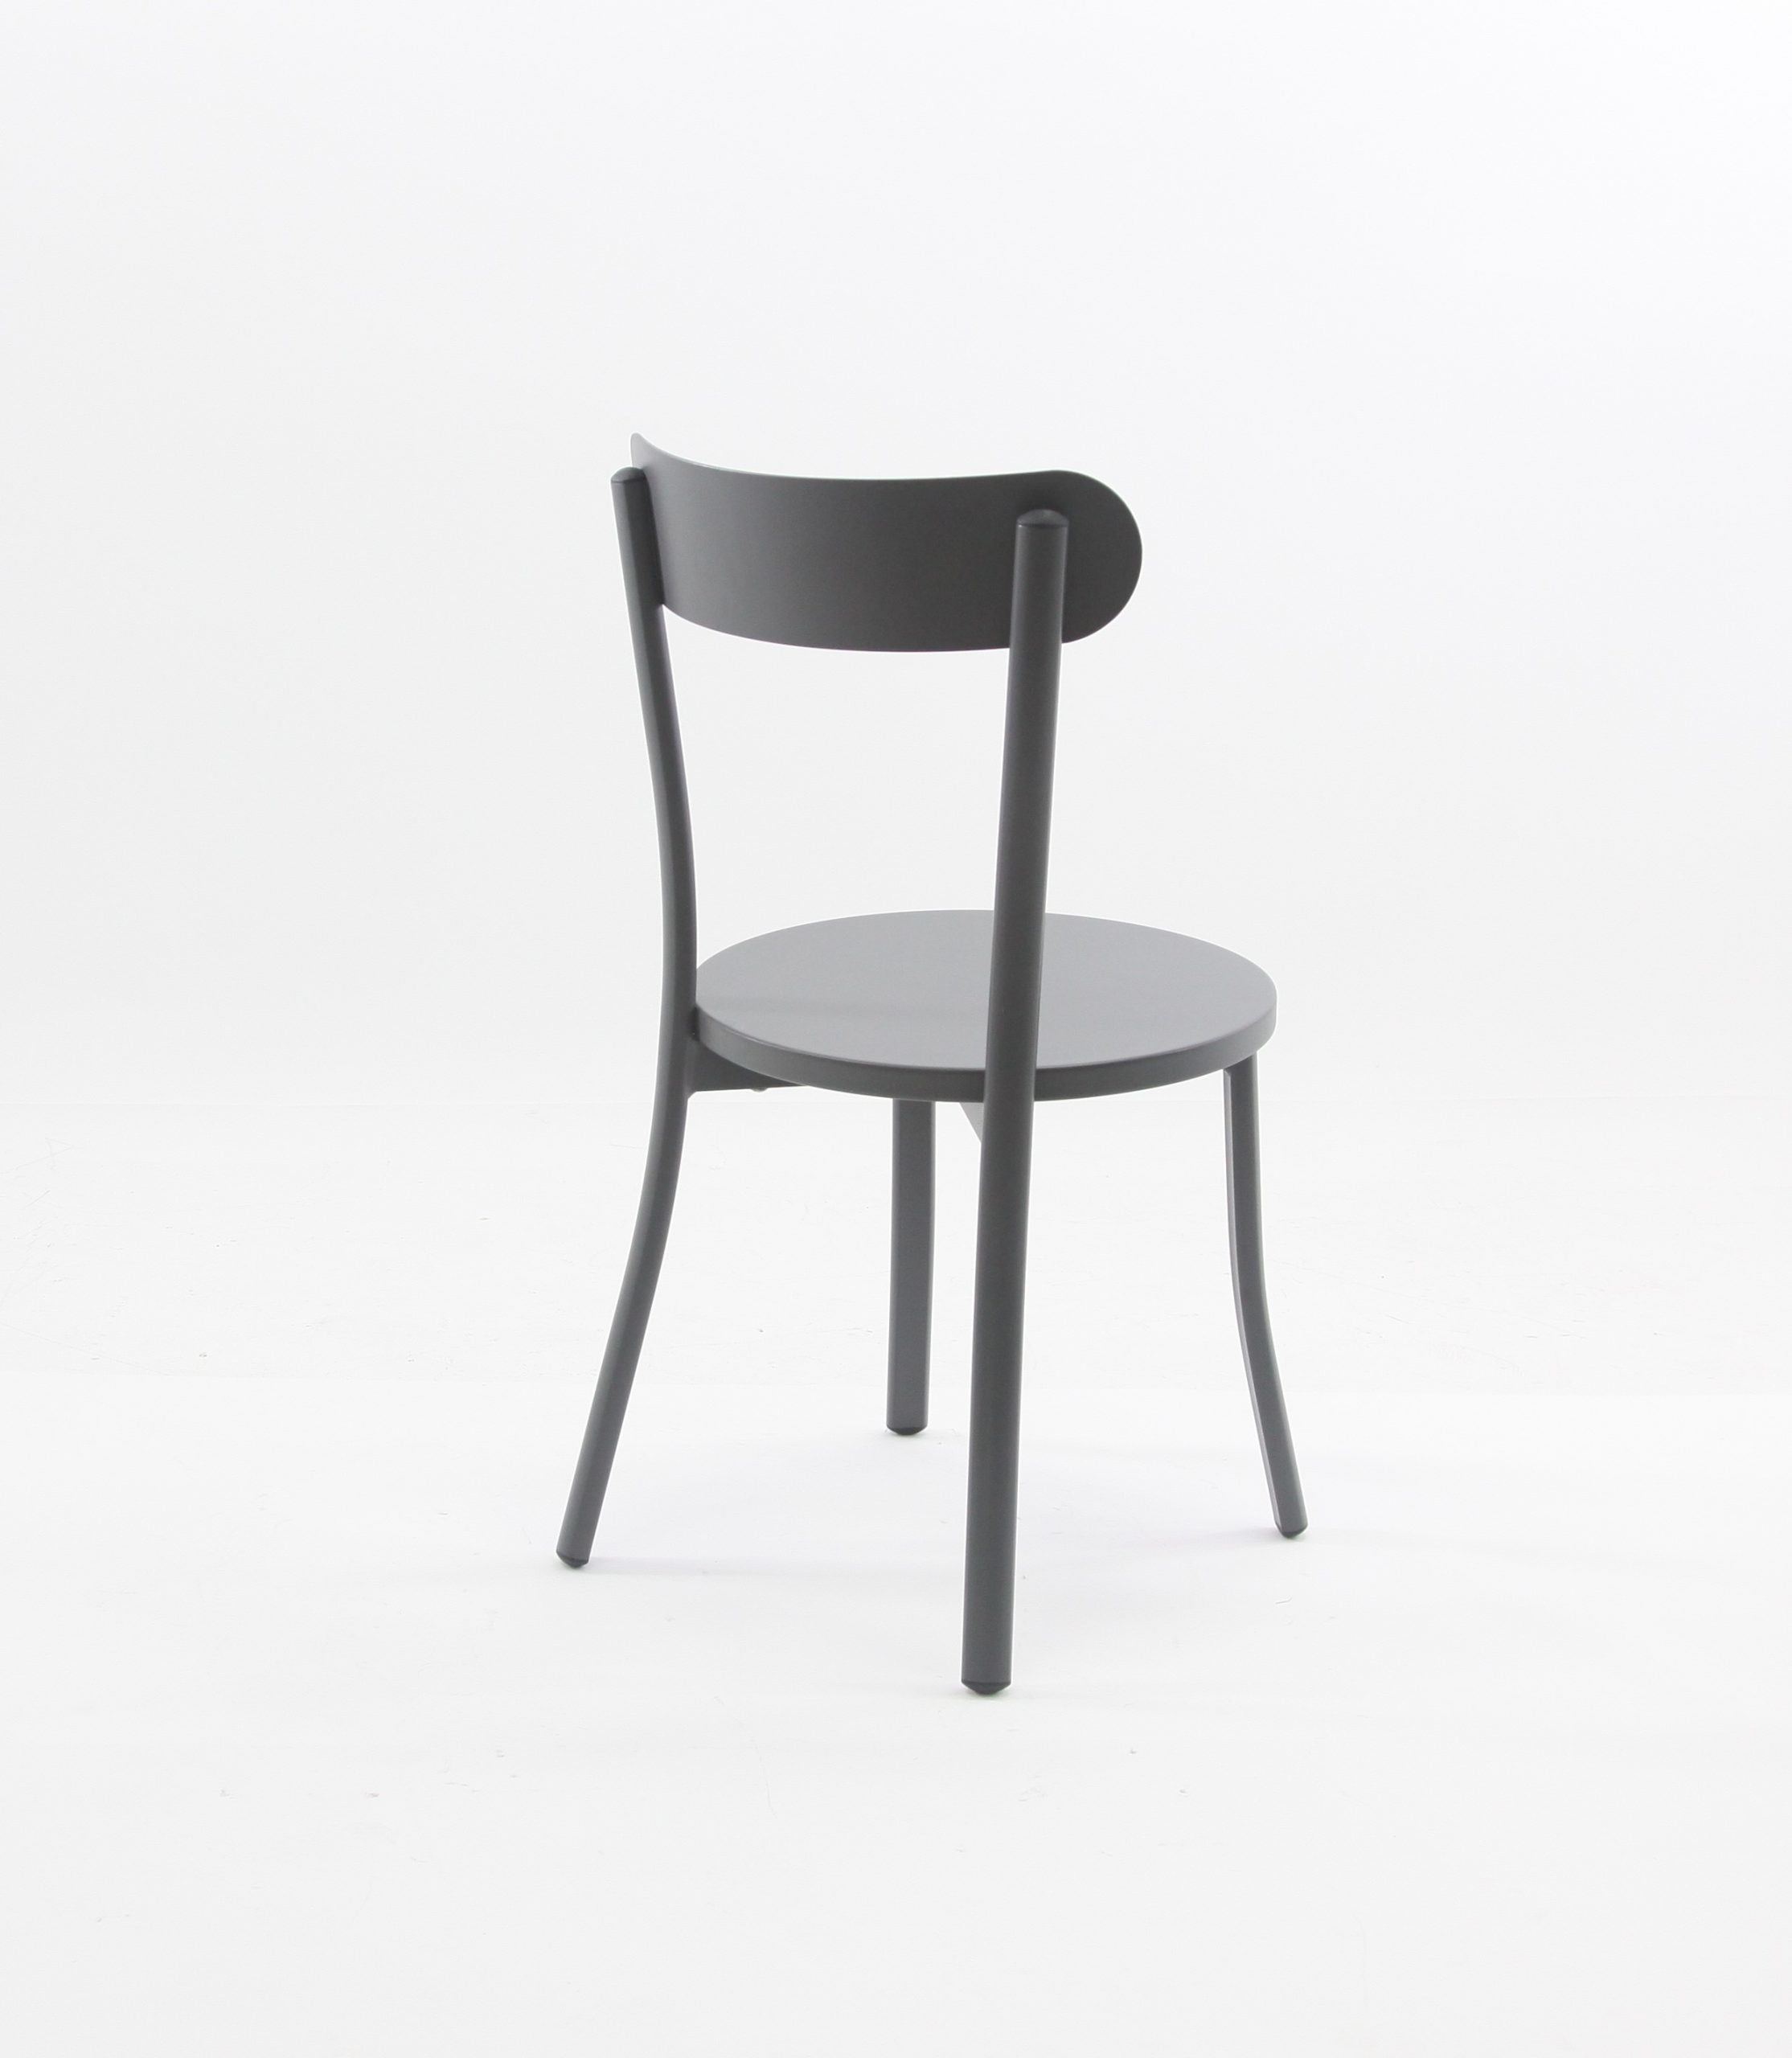 Outdoor Chair - Serie Sko